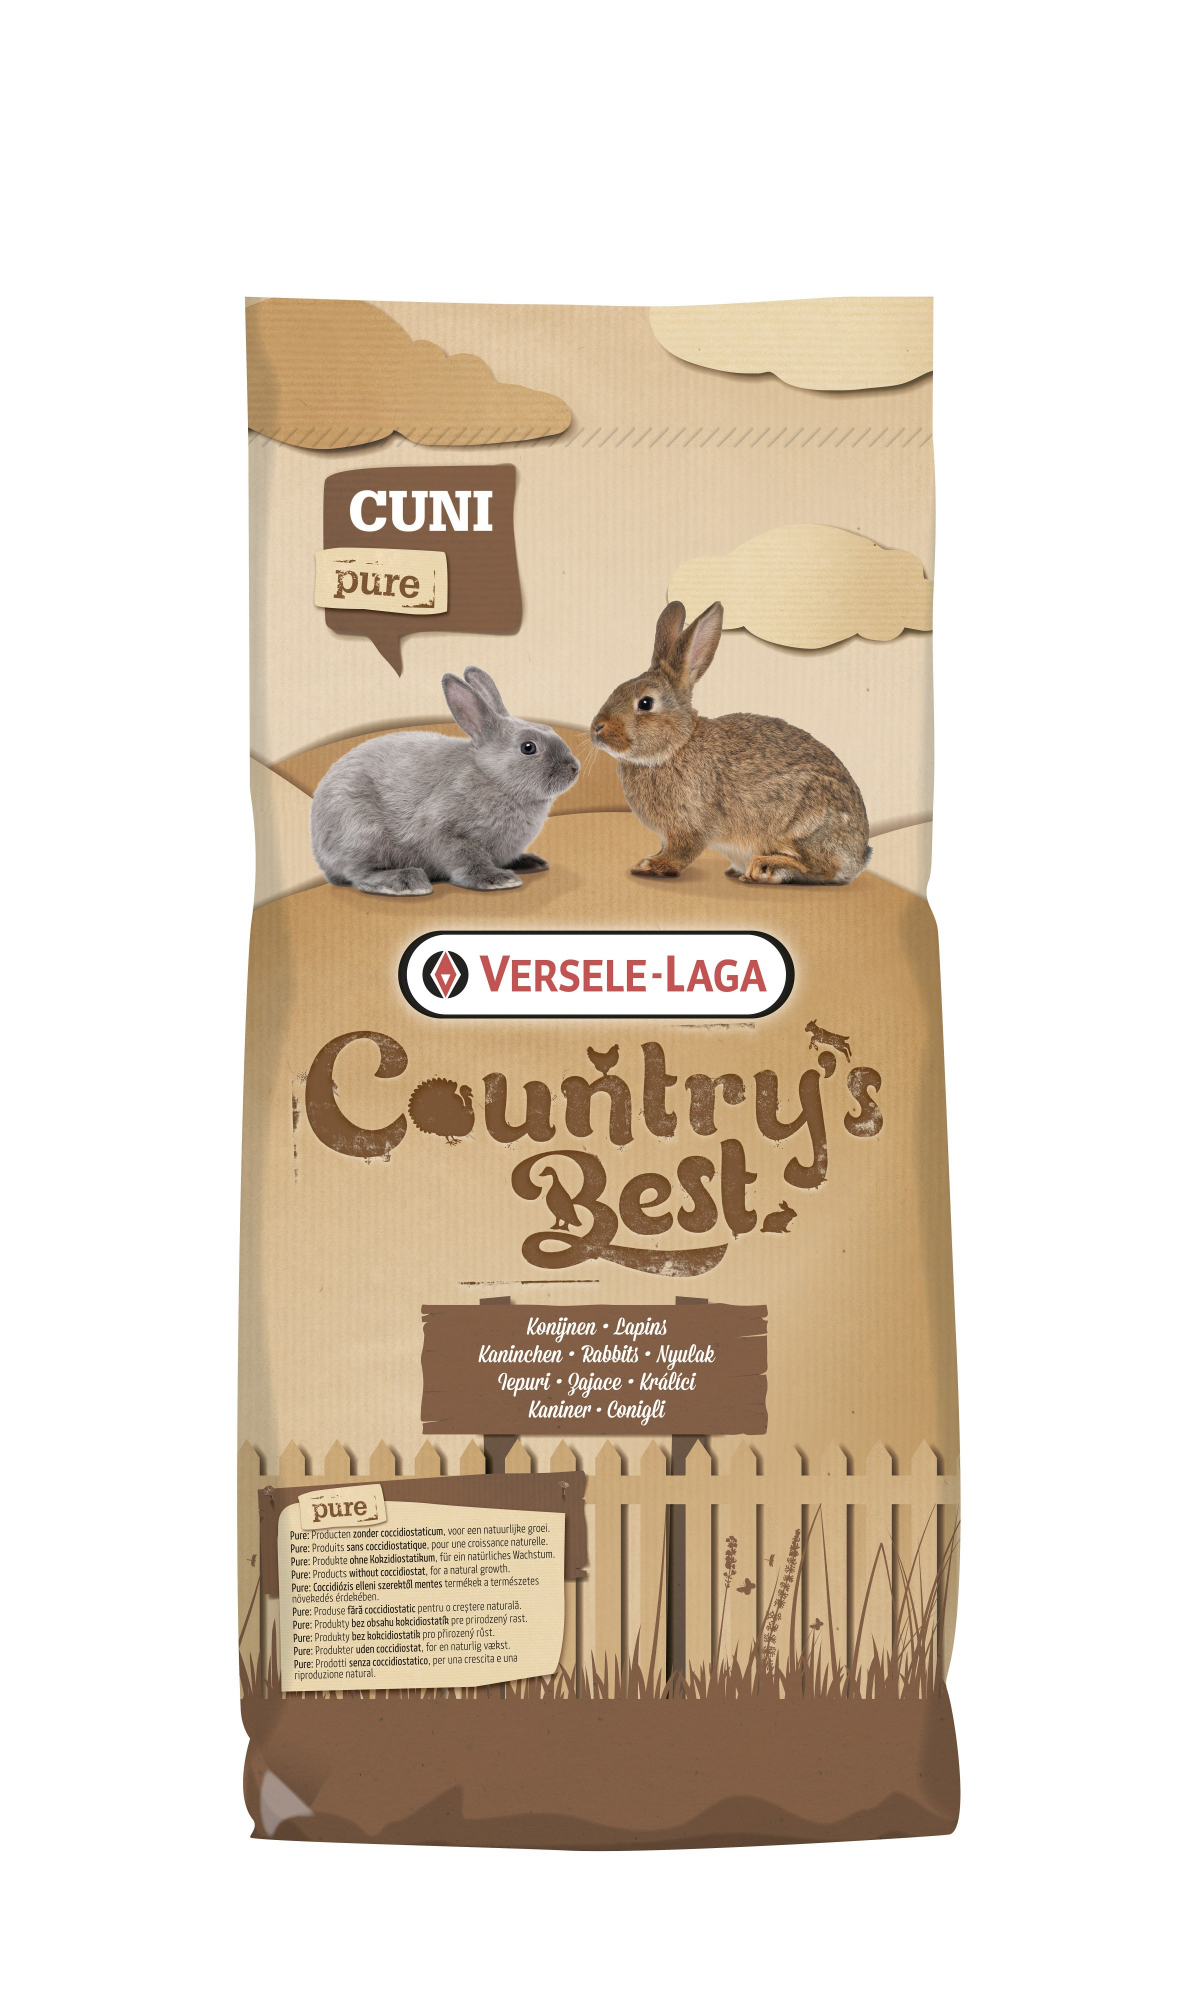 Cuni Top Pure Country's Best Grânulos de energia para coelhos